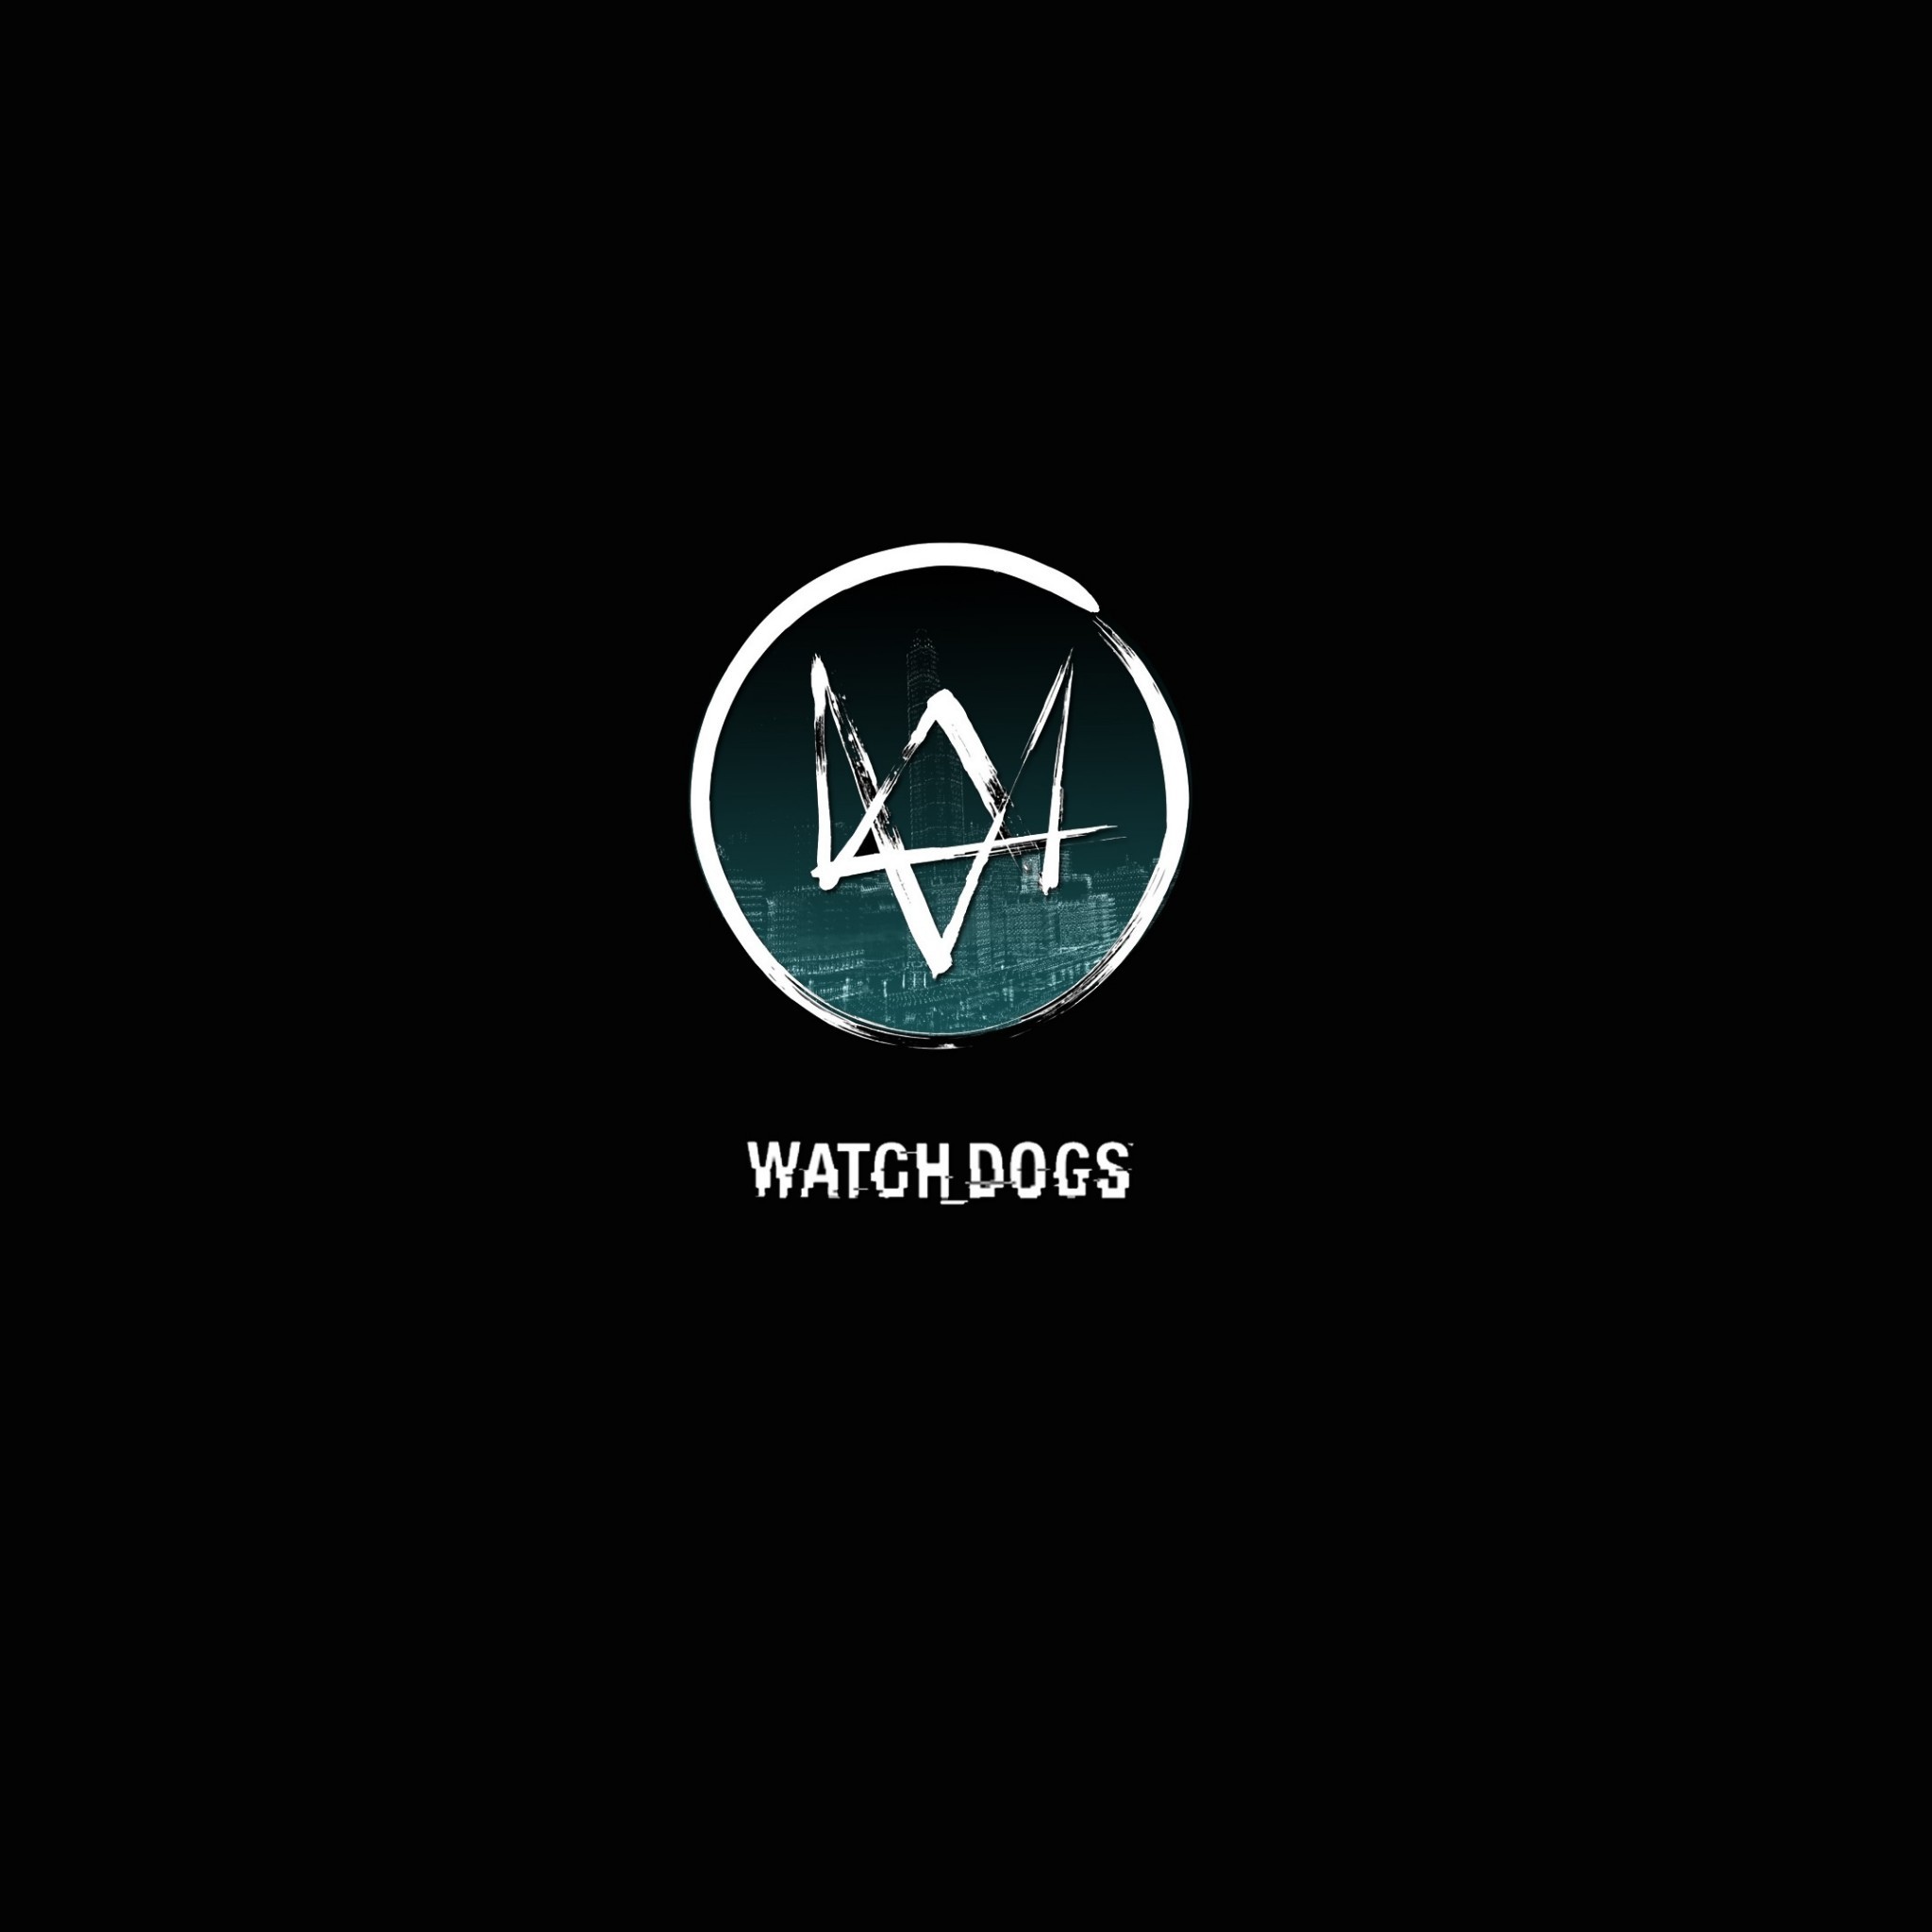 Watch Dogs Logo Wallpaper Image